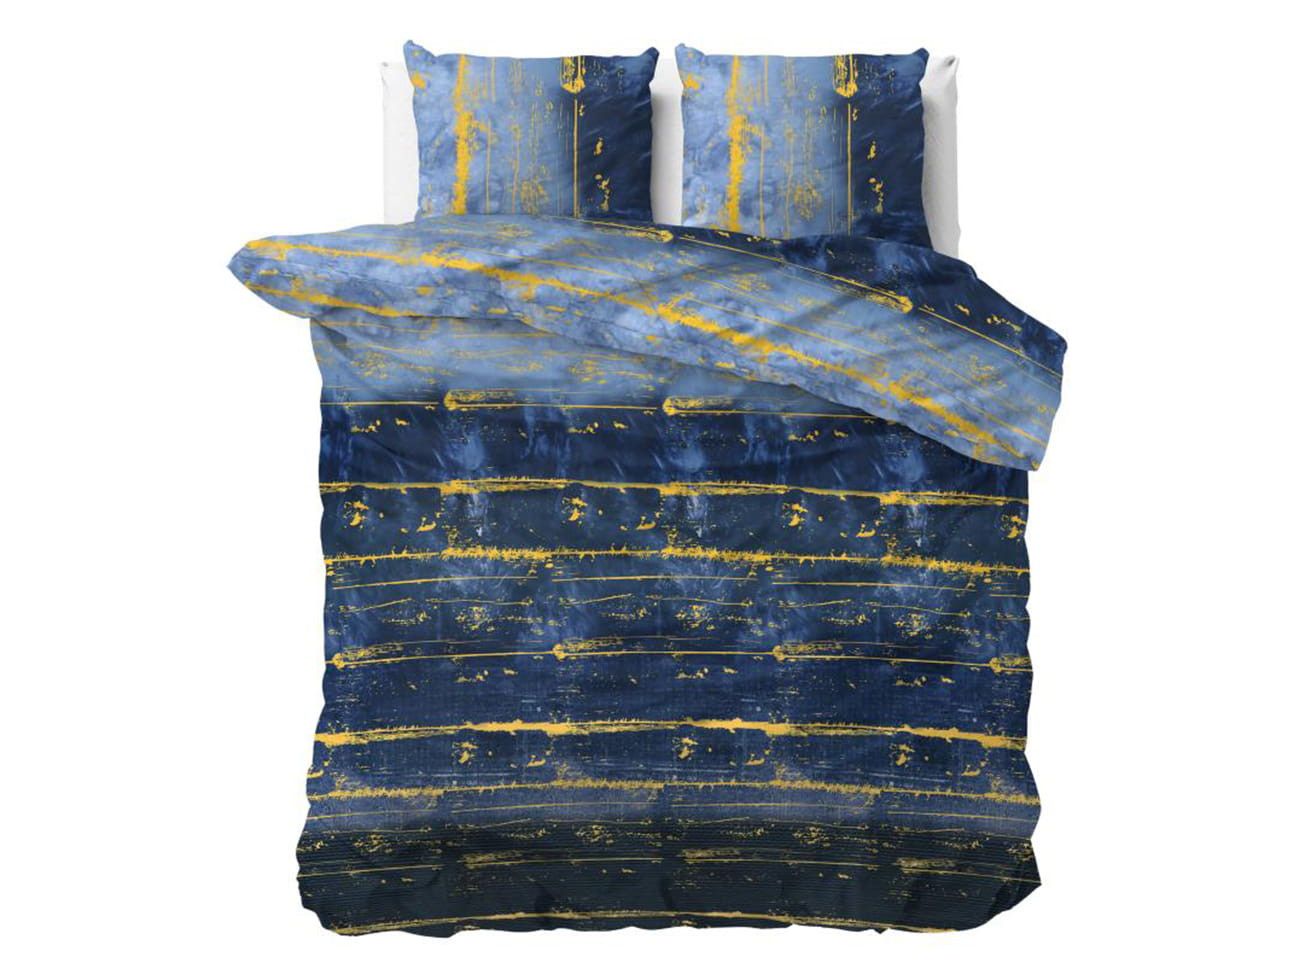 DomTextilu Moderné modro žlté posteľné obleičky z kolekcie ELAGANCE 160 x 200 cm 36762